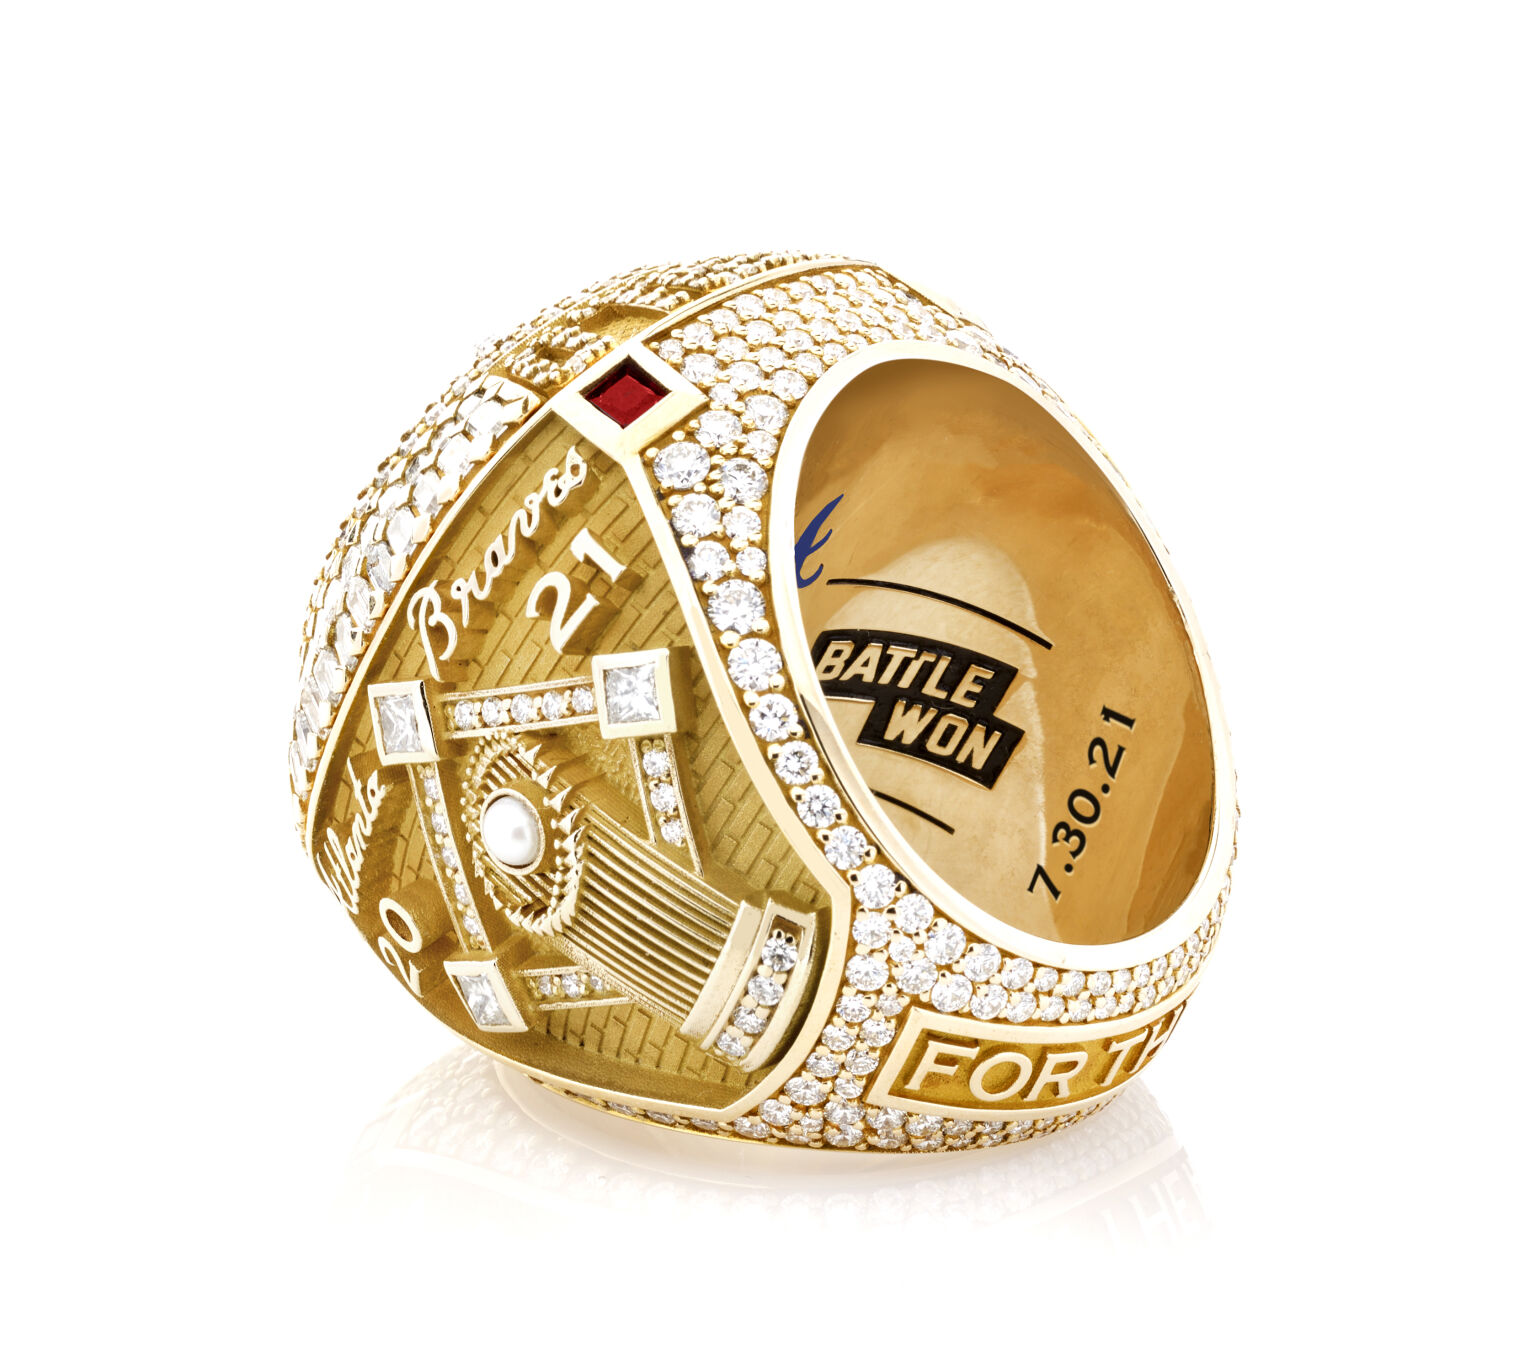 Will Smith - 2021 Atlanta Braves World Series Ring With Wooden Display Box  | eBay